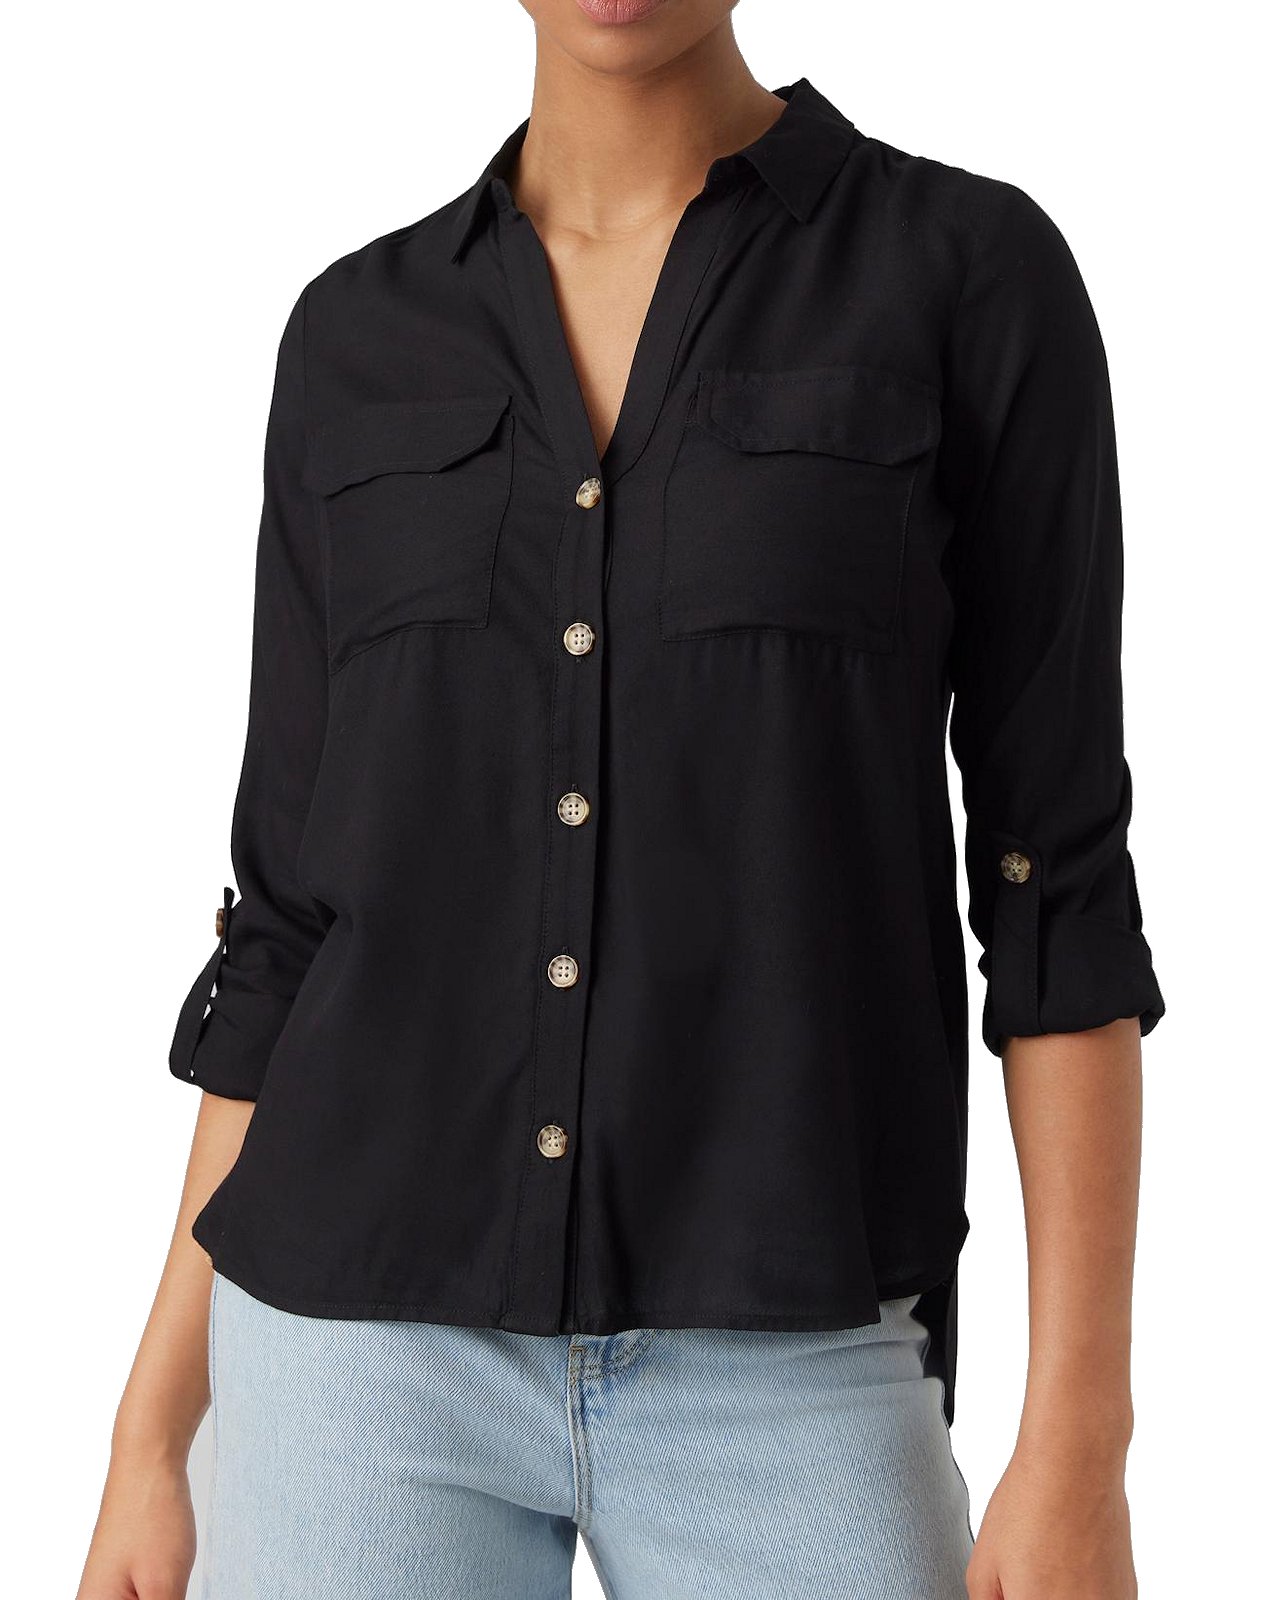 Moda Langarm Marken | Shirt Lifestyle Vero | L.E.M.B. VMBumpy Company Damen Bluse Vero | Moda